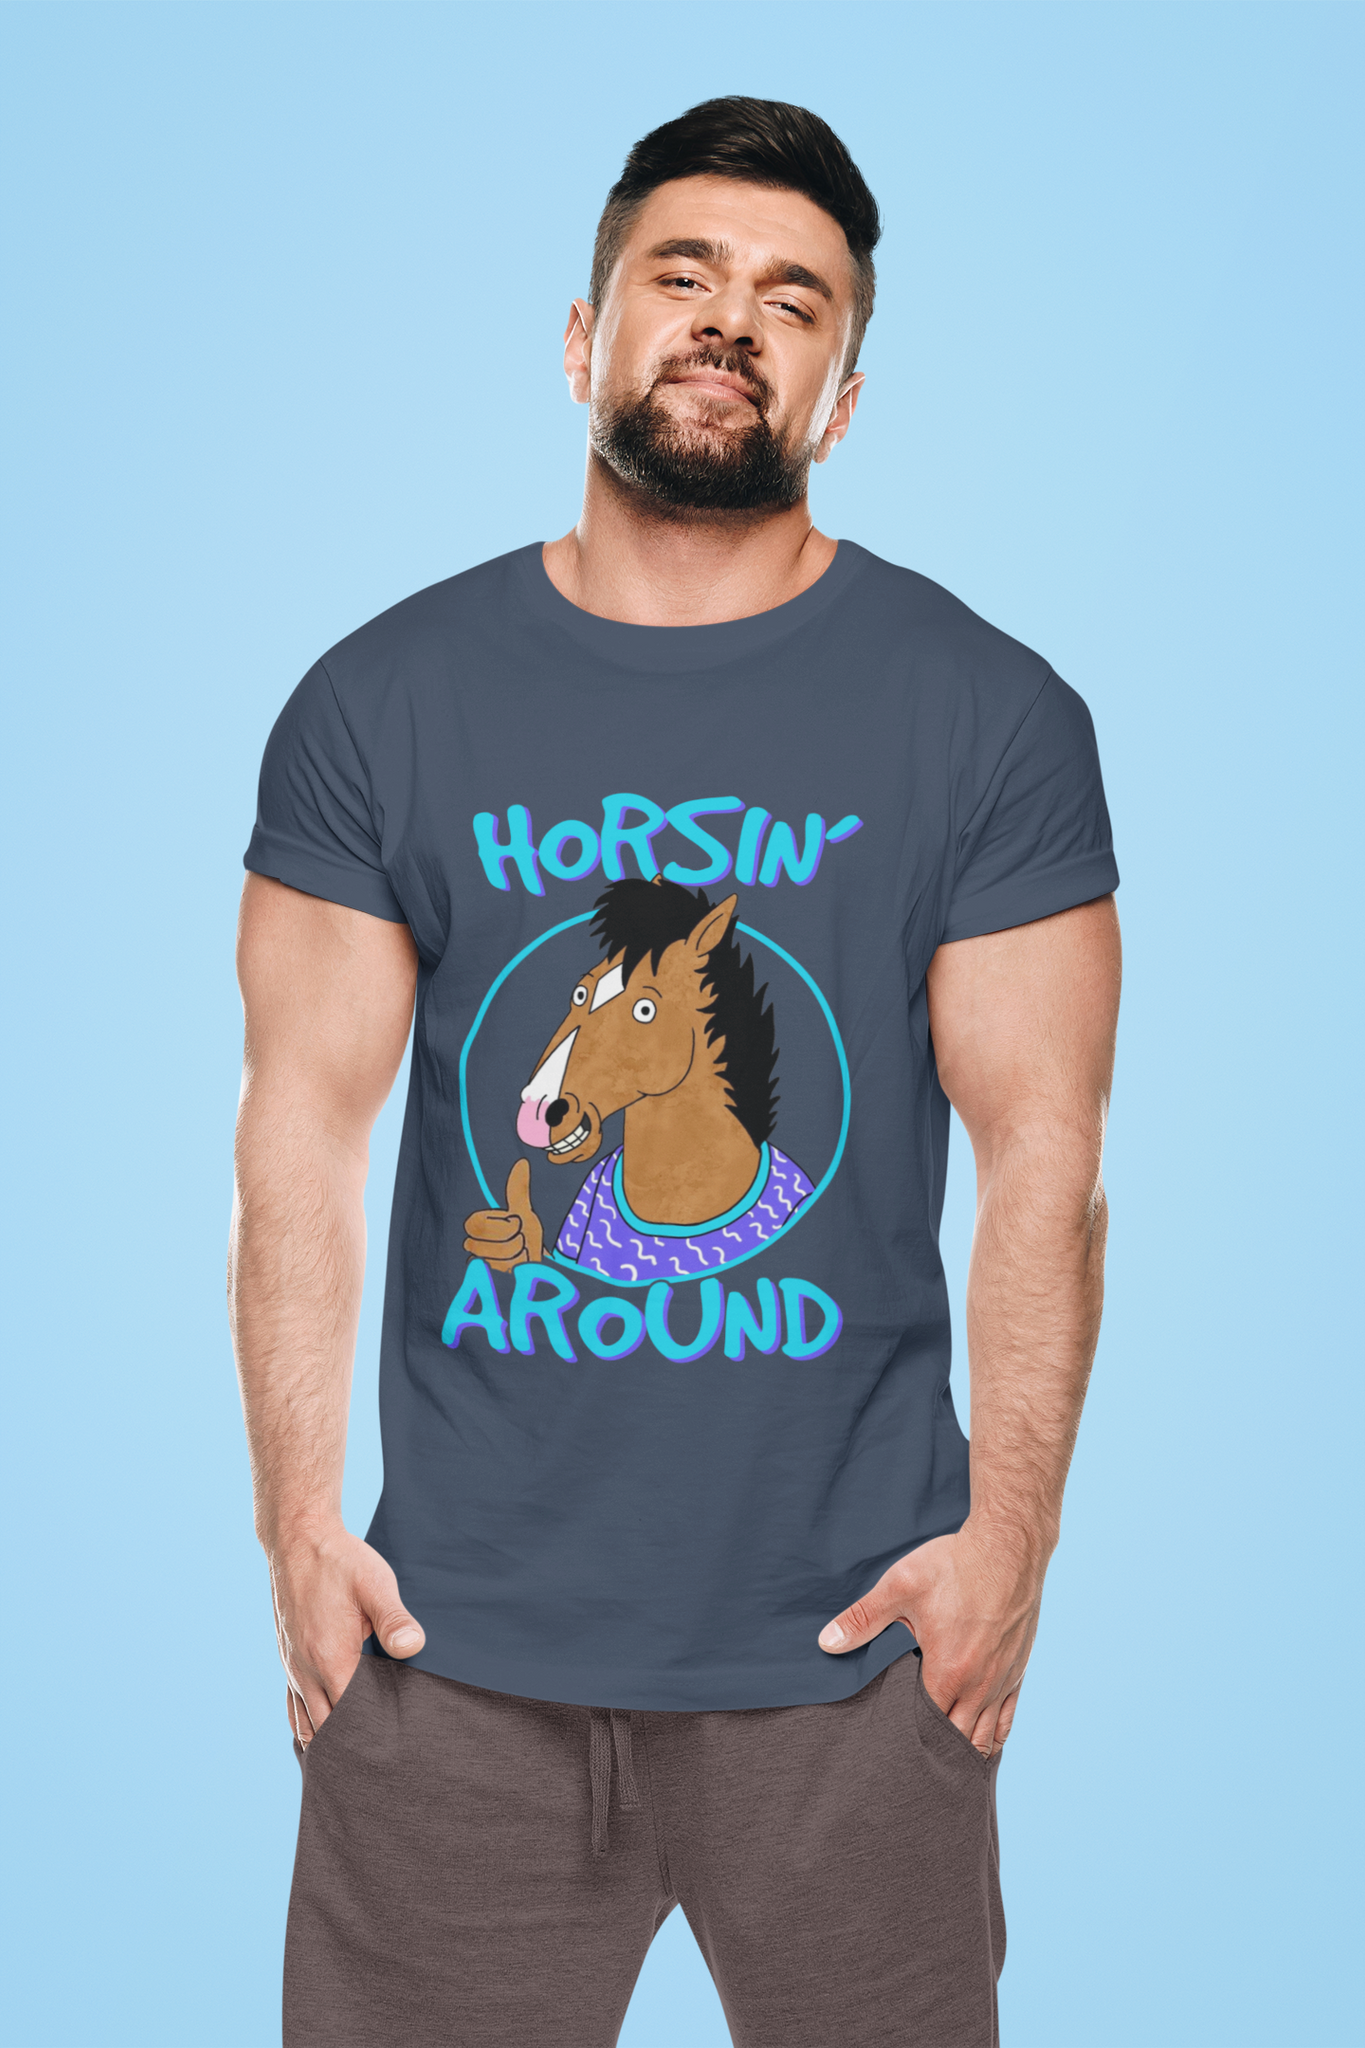 Bojack Horseman T Shirt, Horsin Around Tshirt